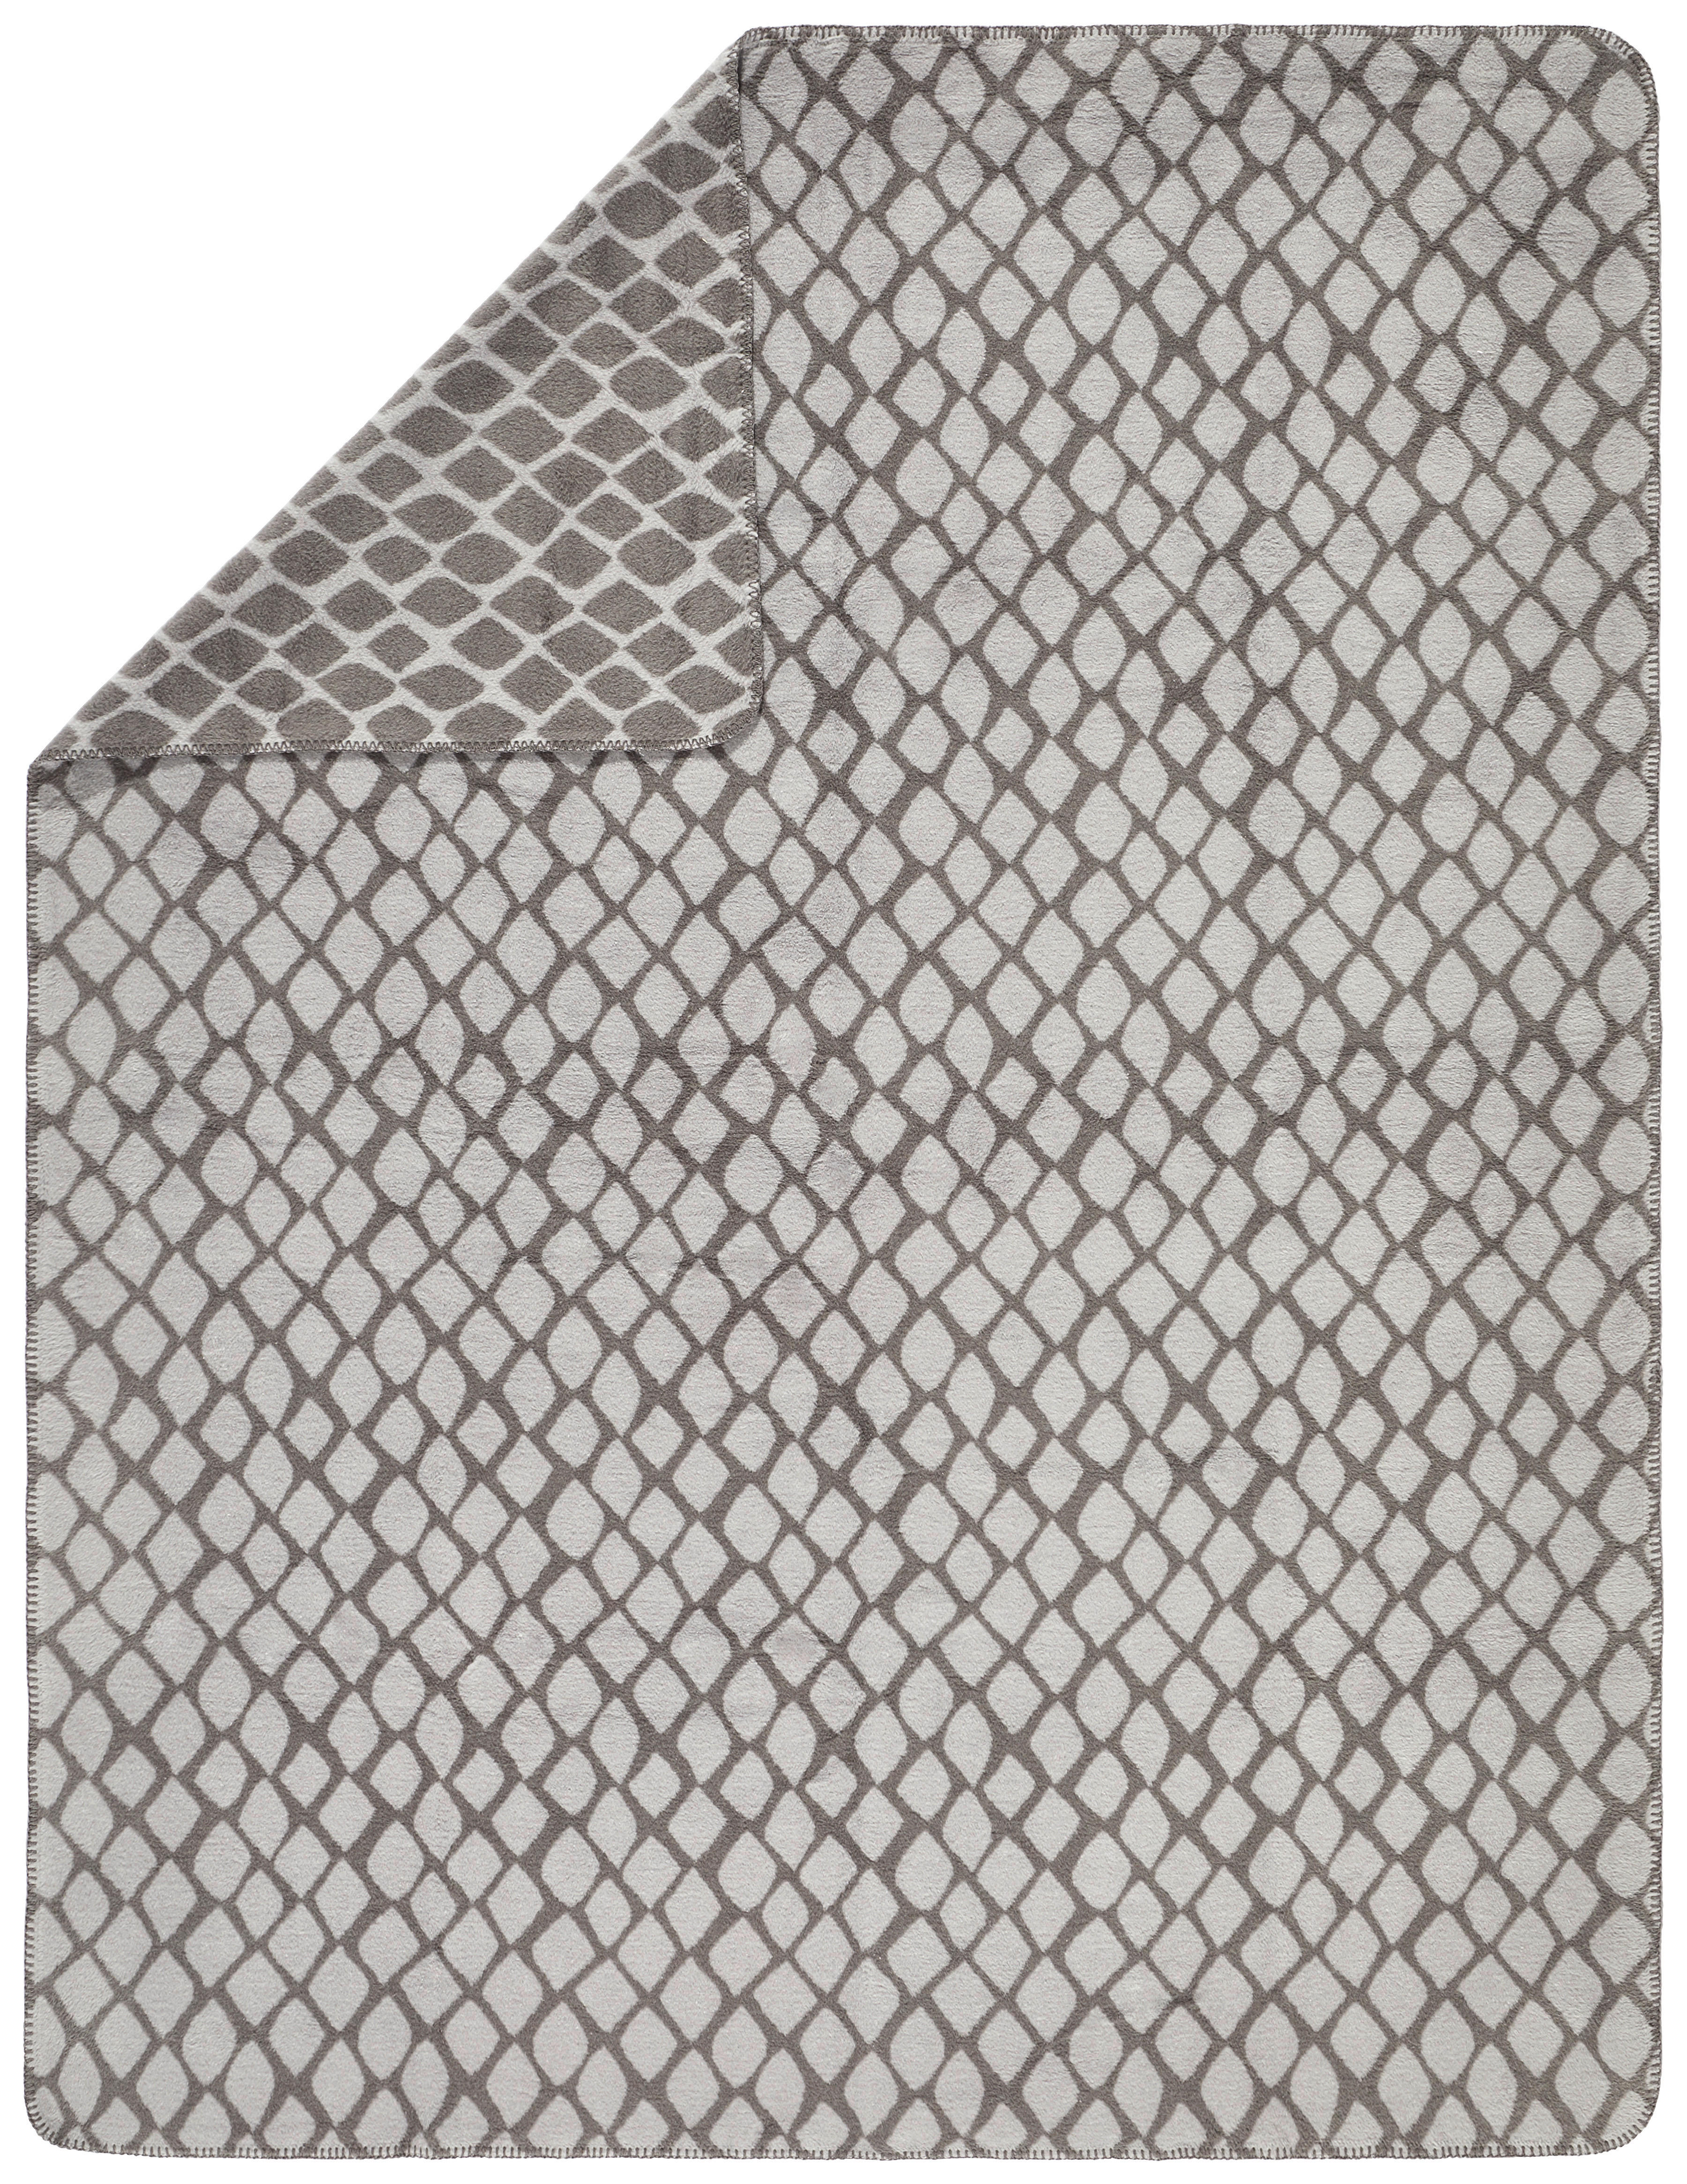 PLÄD 150/200 cm  - antracit, Basics, textil (150/200cm) - Dieter Knoll